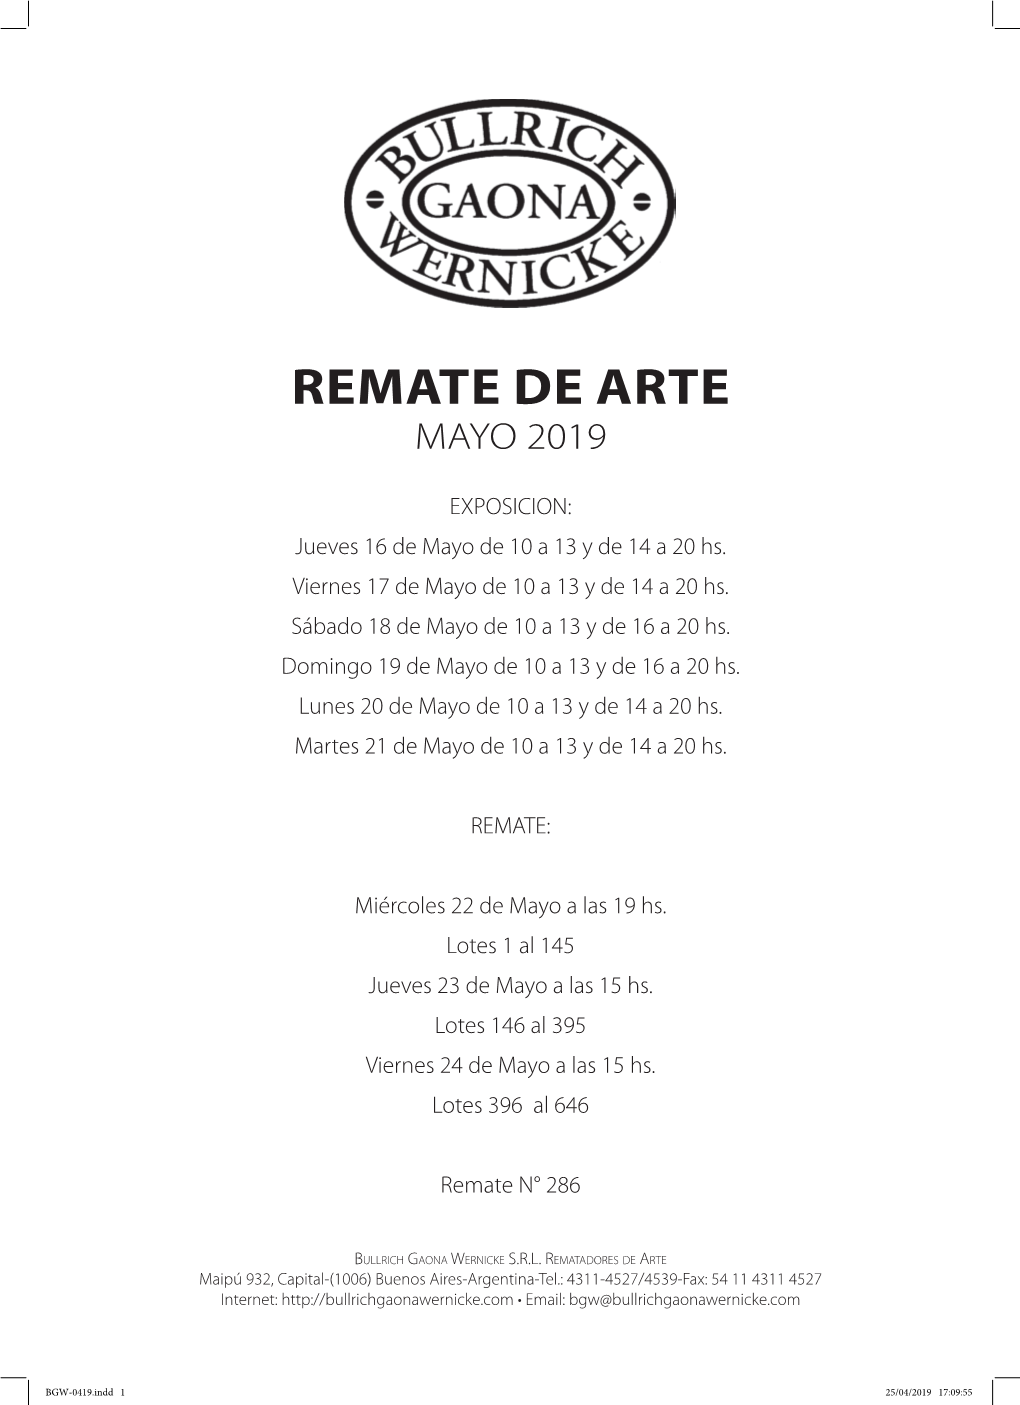 REMATE DE ARTE Mayo 2019